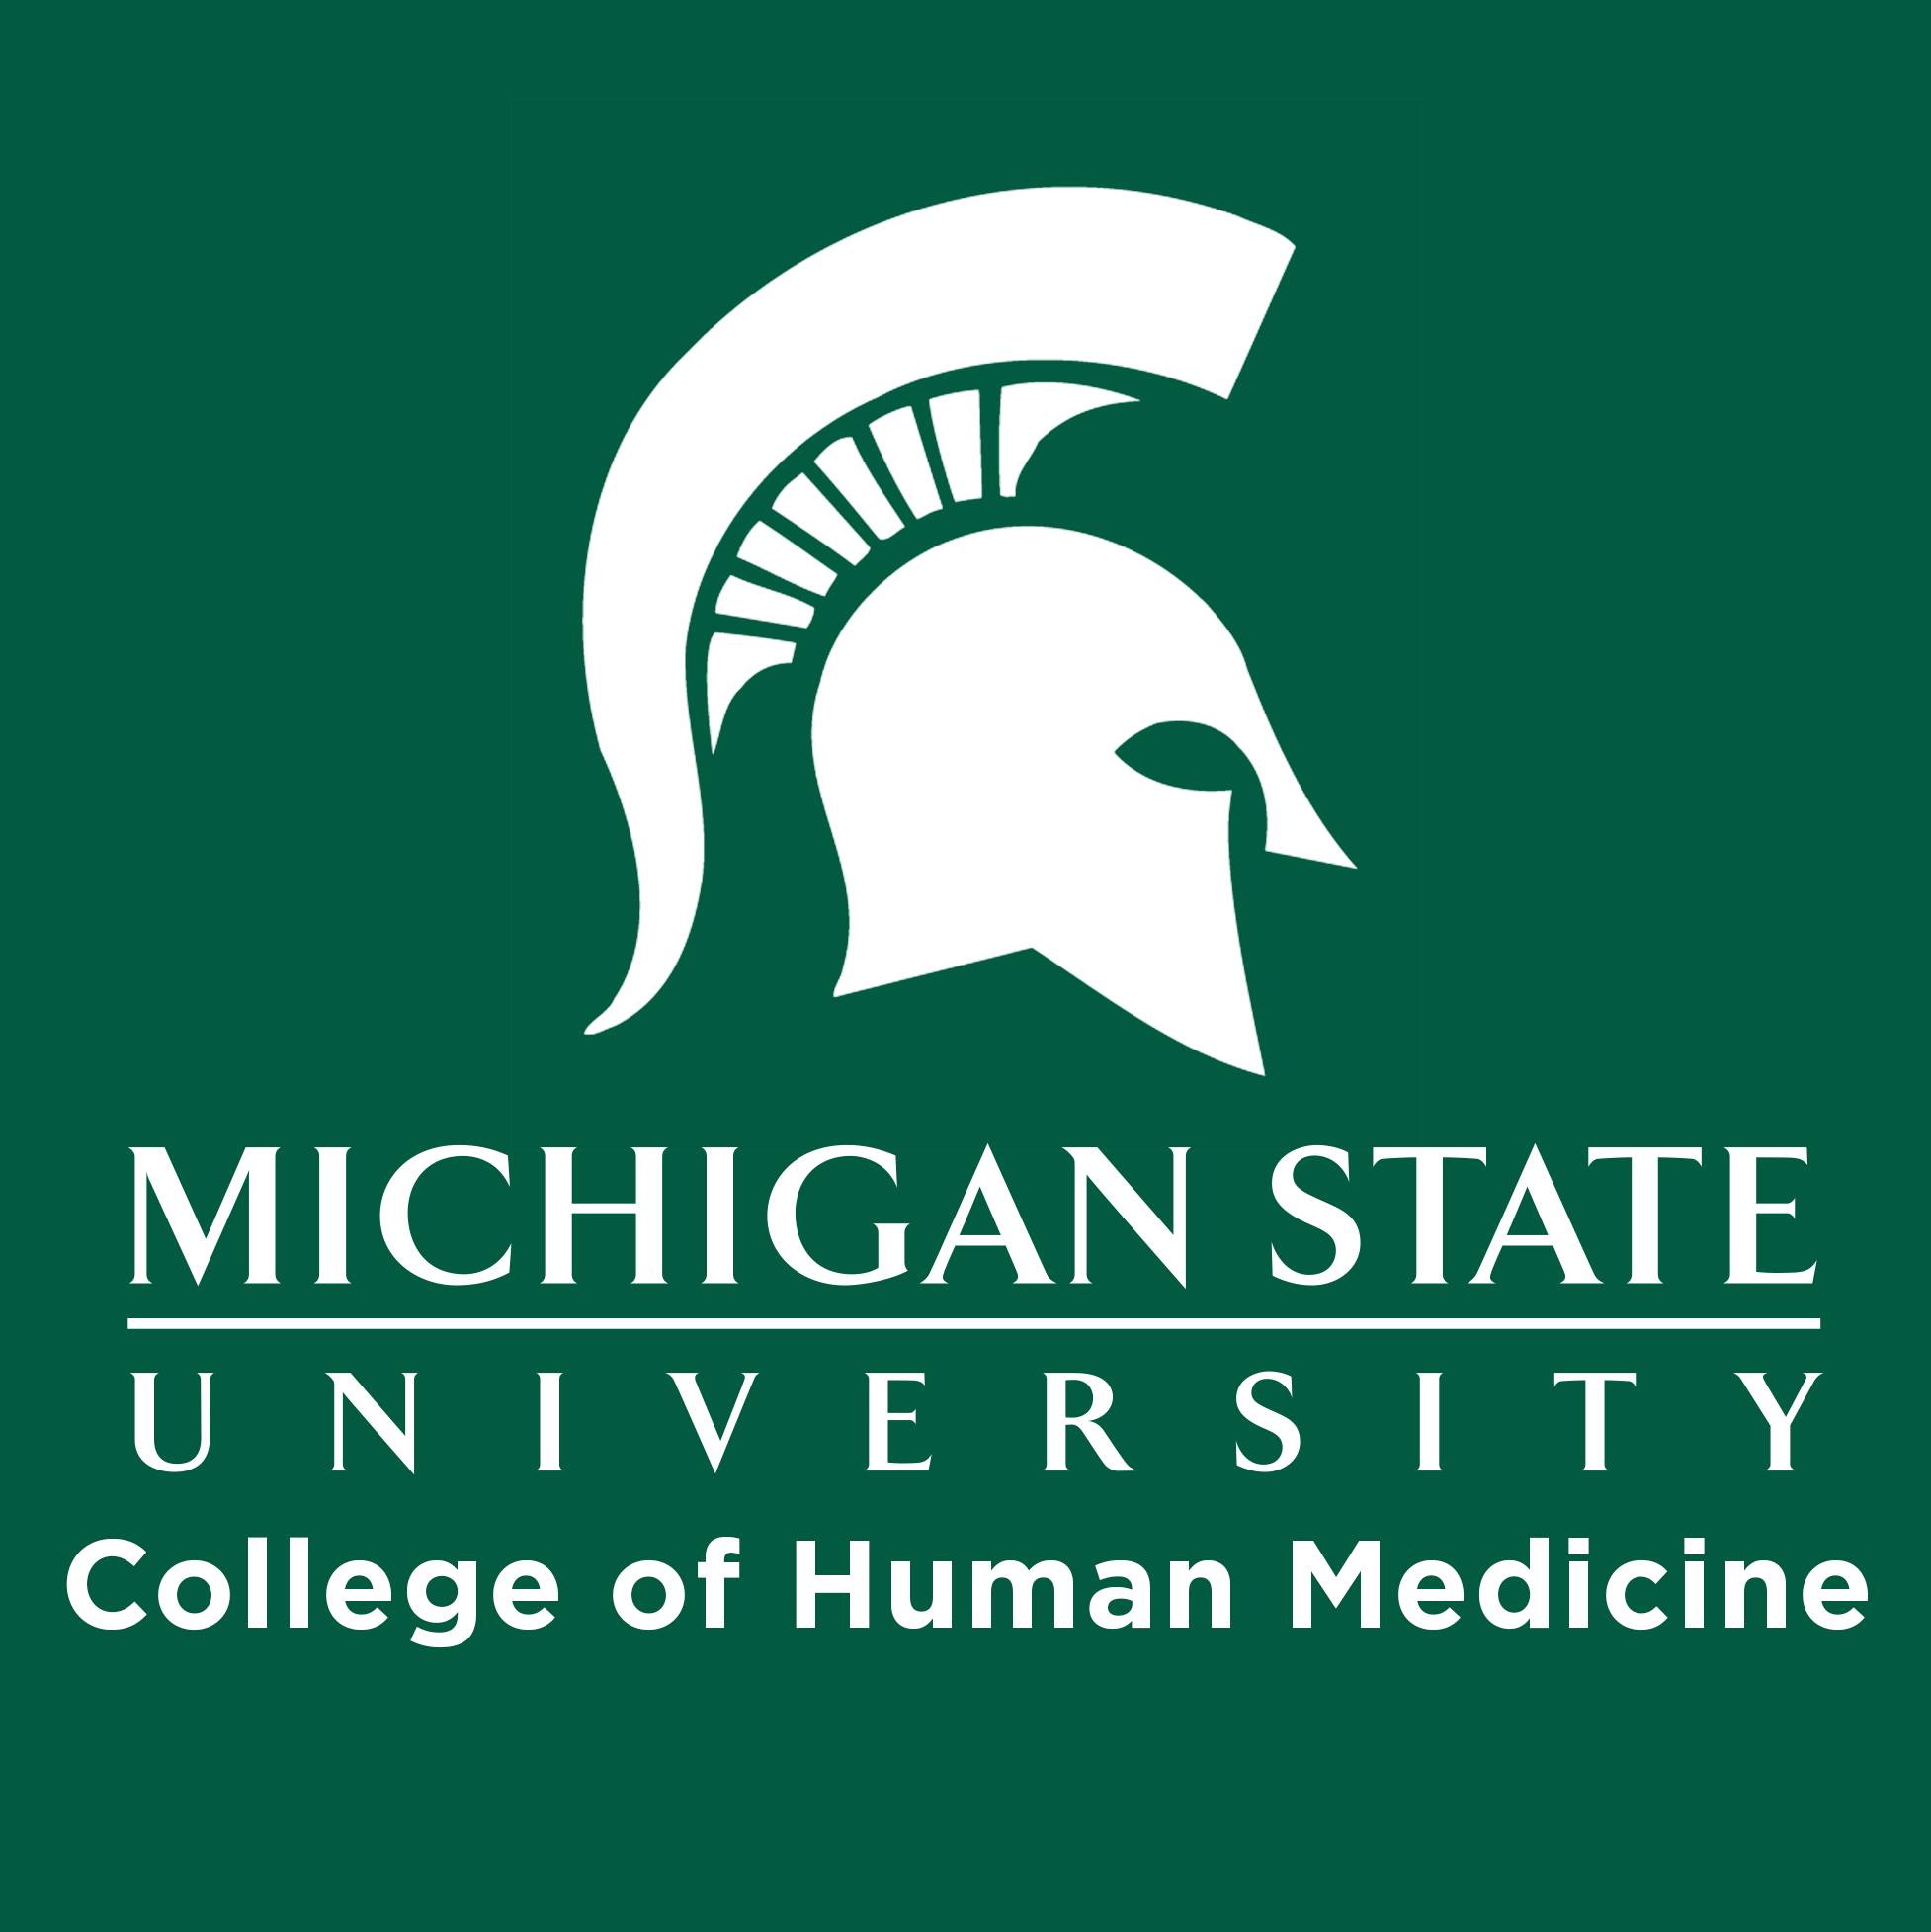 Michigan State University - College of Human Medicine logo